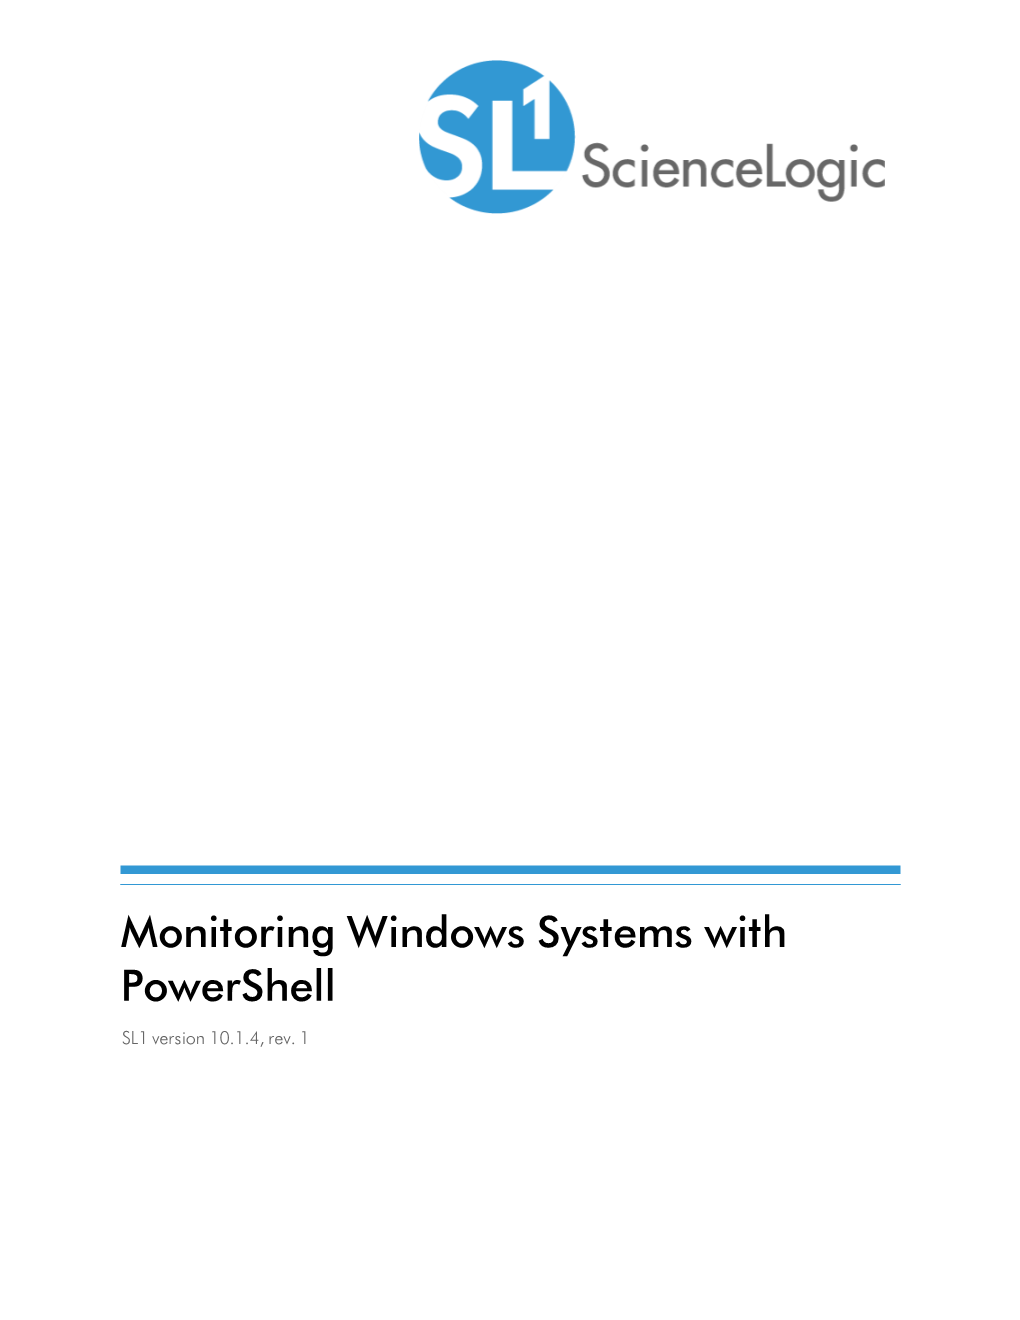 Monitoring Windows with Powershell (Version 10.1.4, Rev. 1)